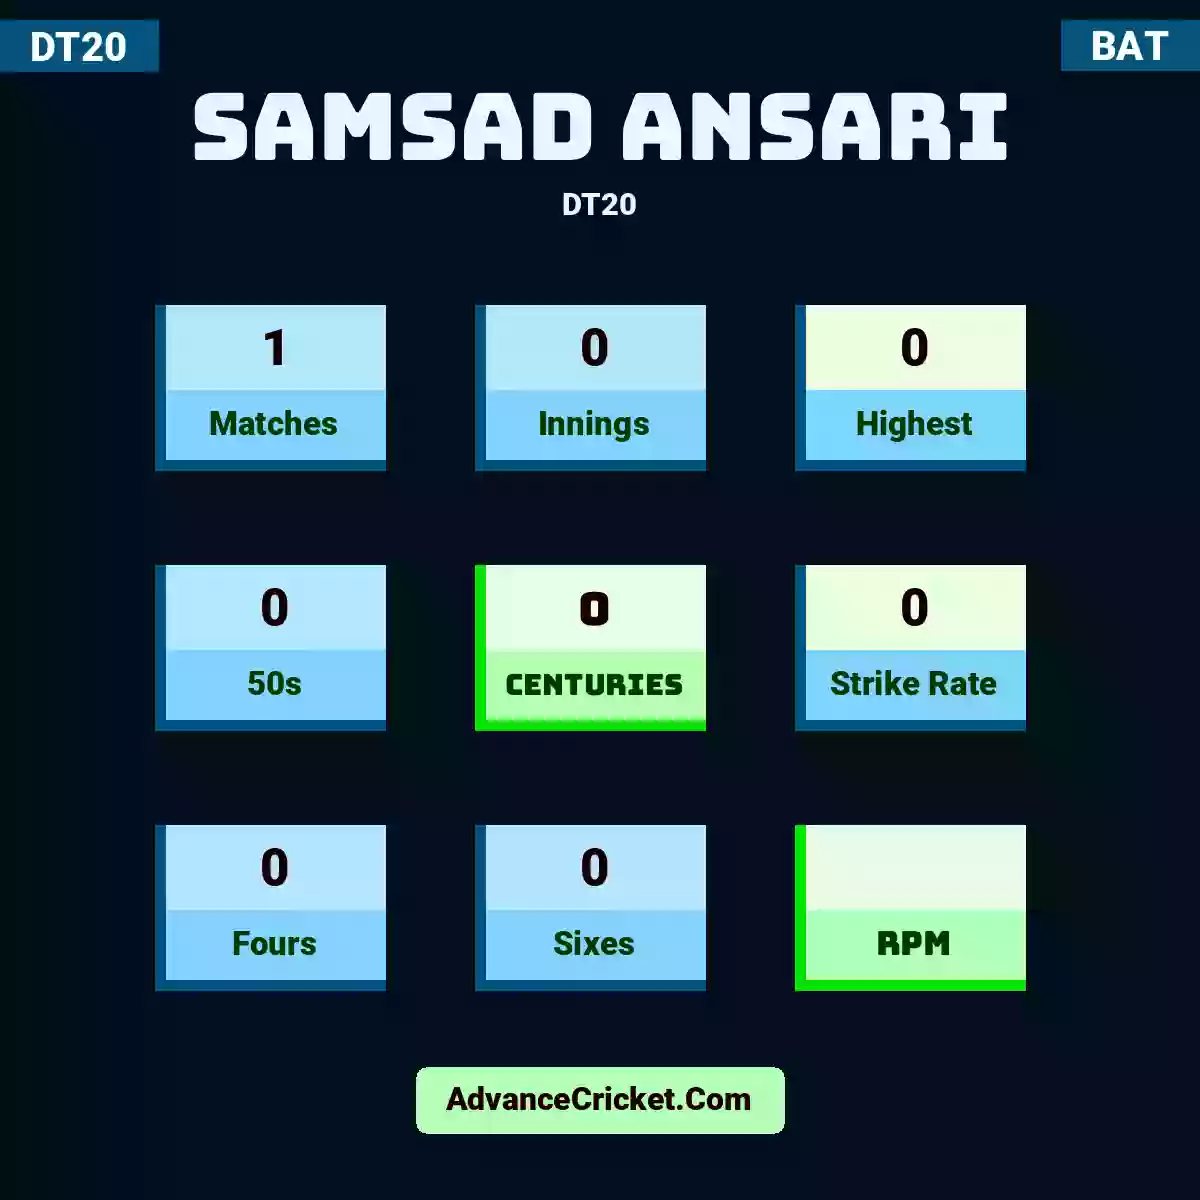 Samsad Ansari DT20 , Samsad Ansari played 1 matches, scored 0 runs as highest, 0 half-centuries, and 0 centuries, with a strike rate of 0. S.Ansari hit 0 fours and 0 sixes.